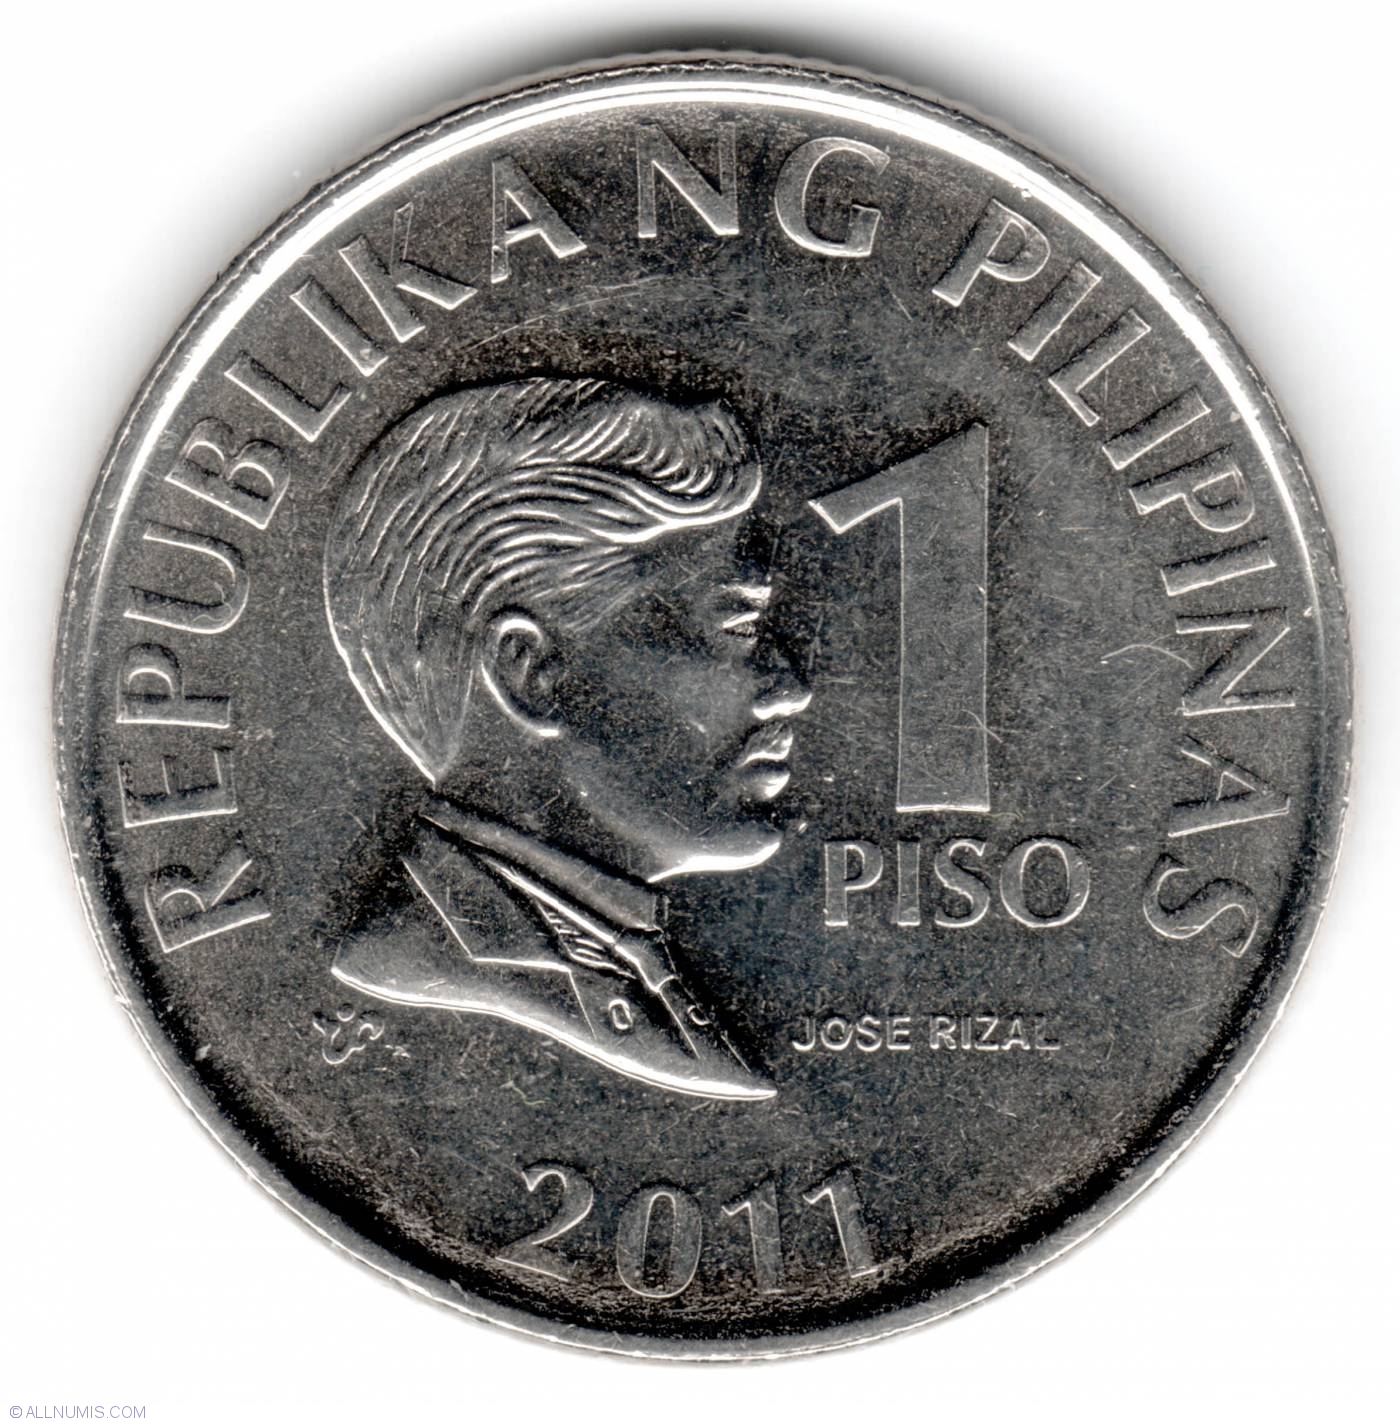 1 peso coin philippines 2005